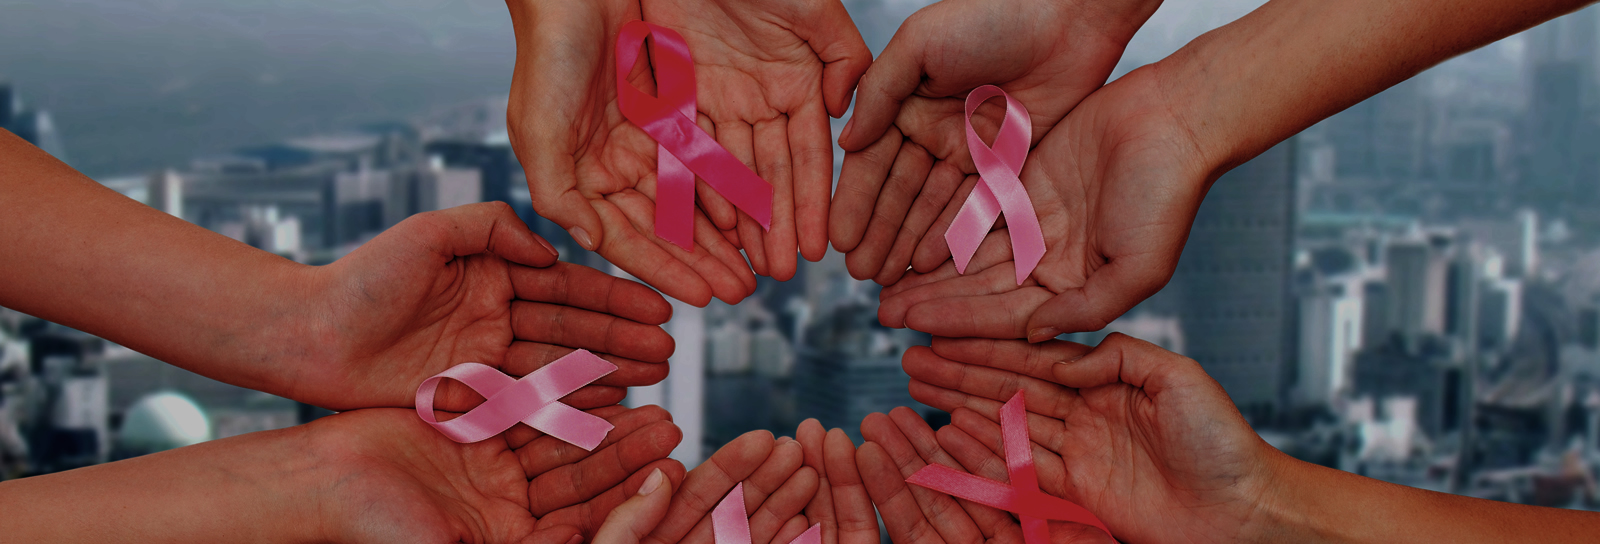 Survivorship Care Plans - Breast Cancer Center Accreditation